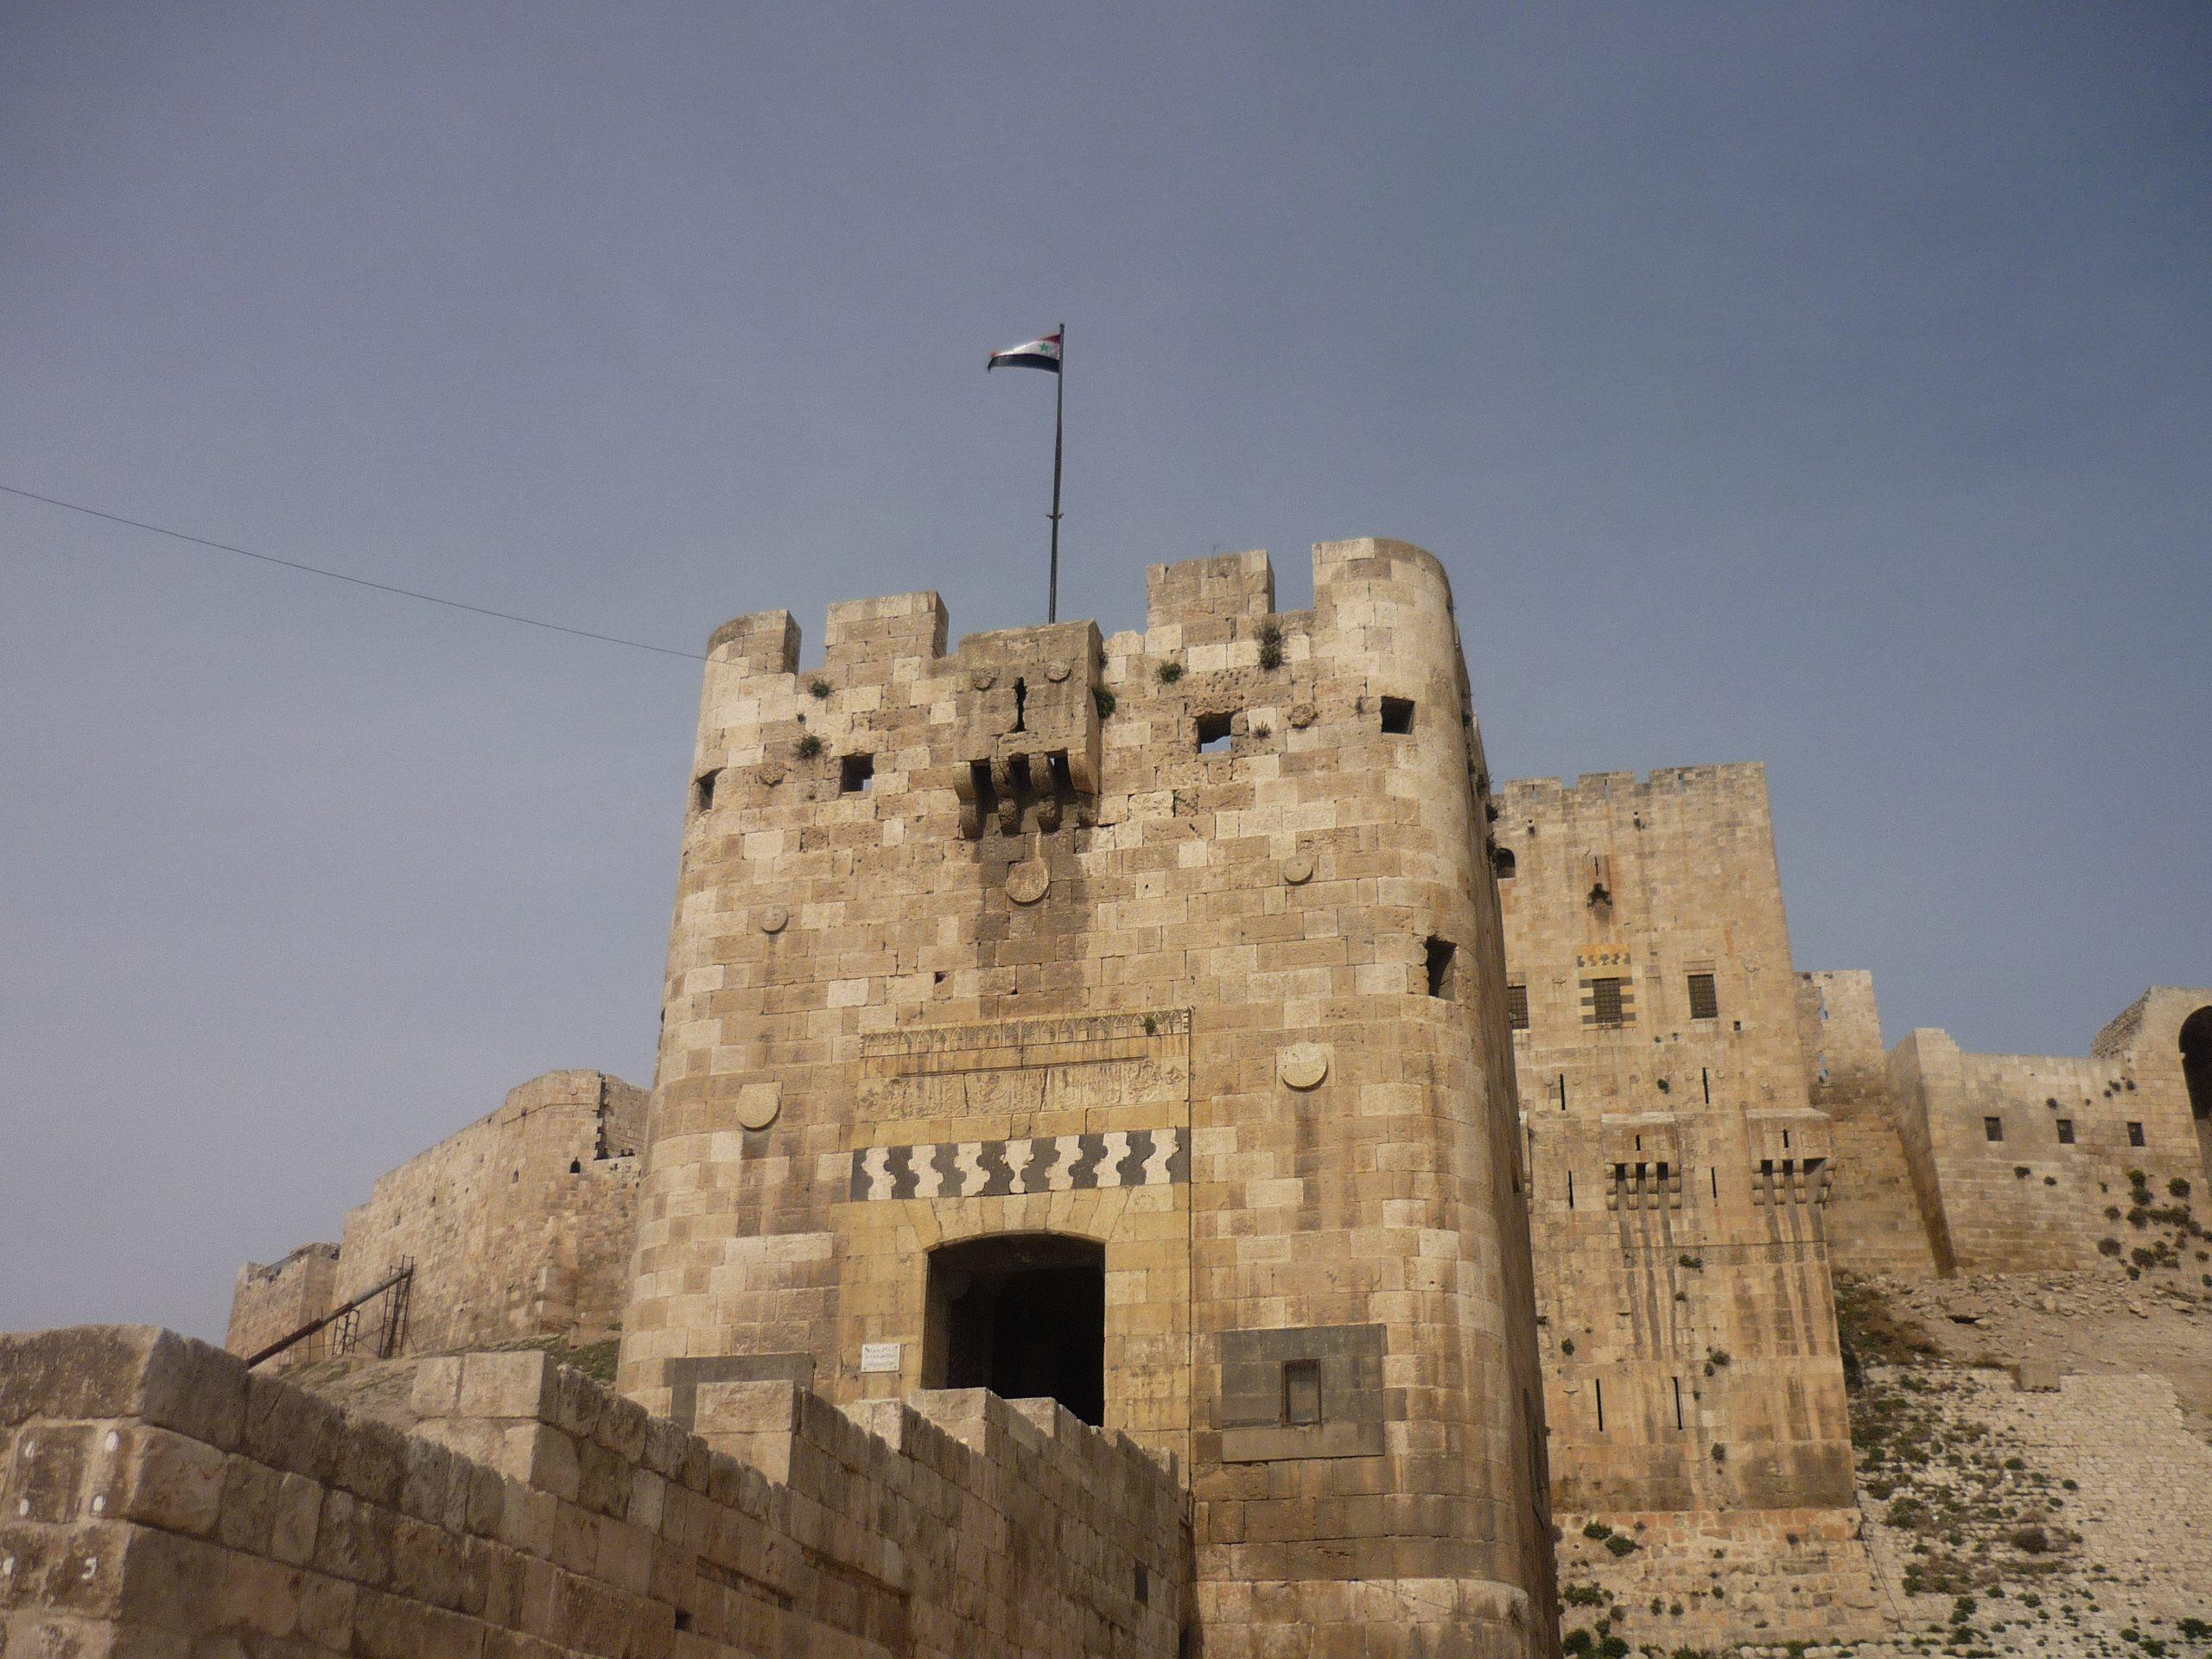 Syria Aleppo Castle HD Travel Photo And 2560x1920 #syria